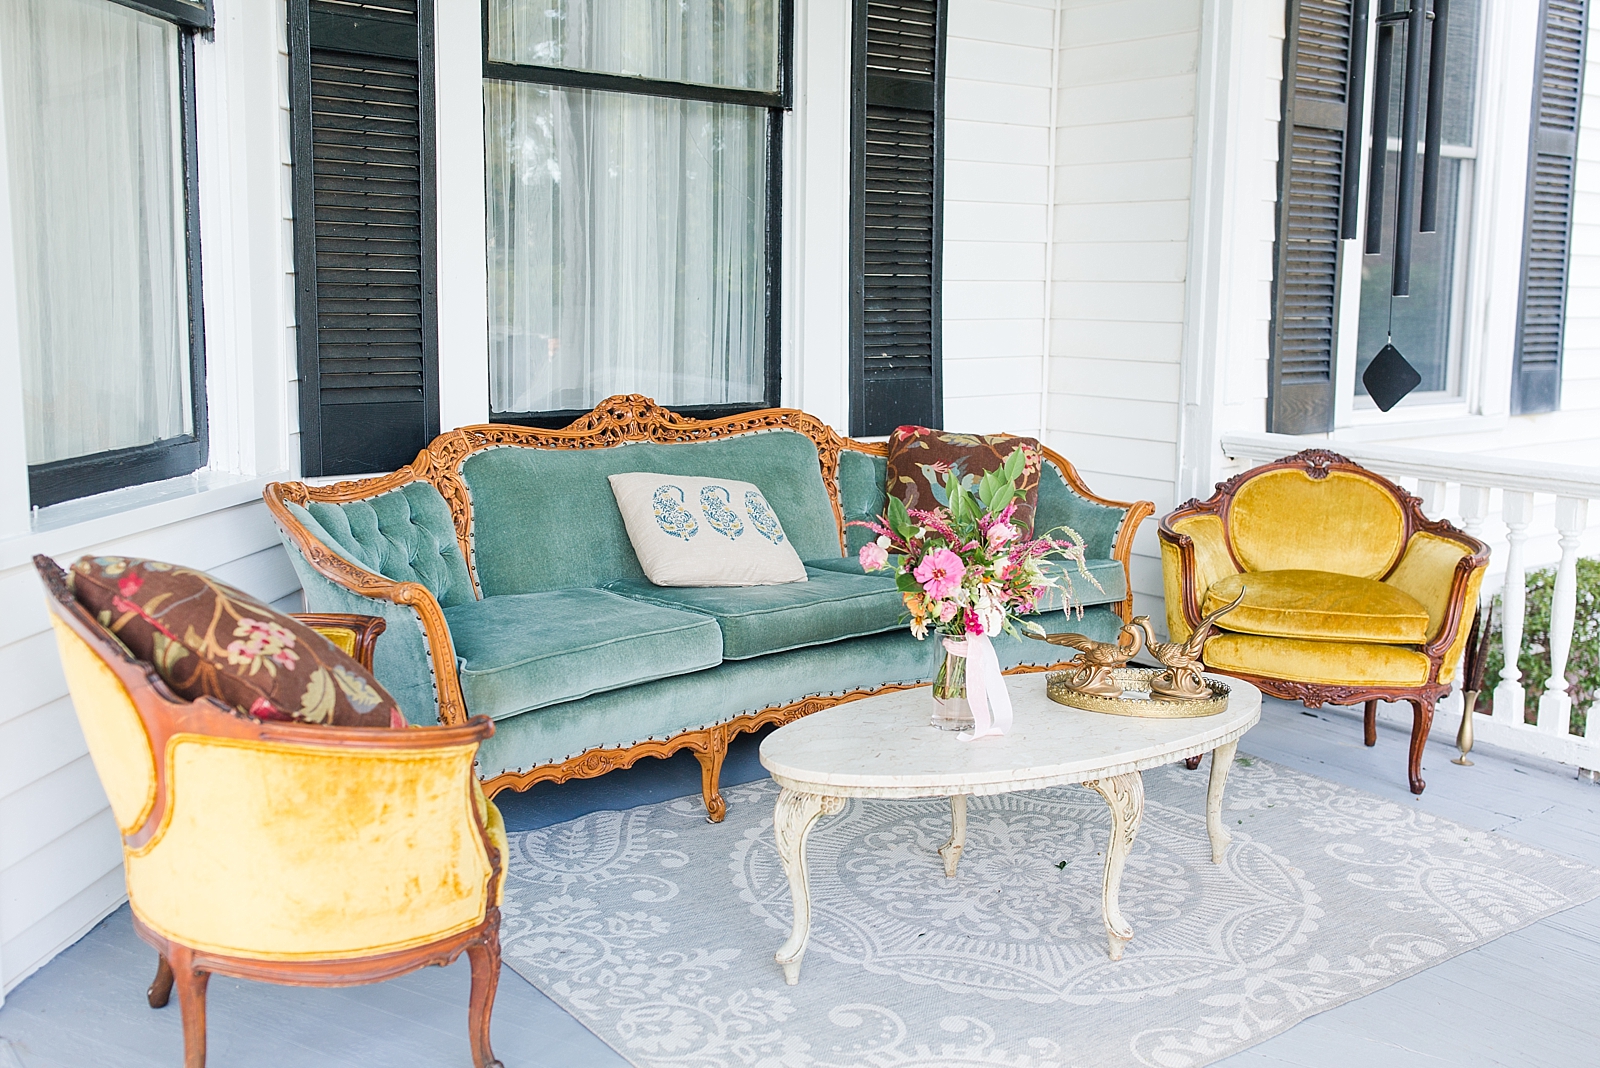 Columbia SC wedding venue vintage furniture on porch photo